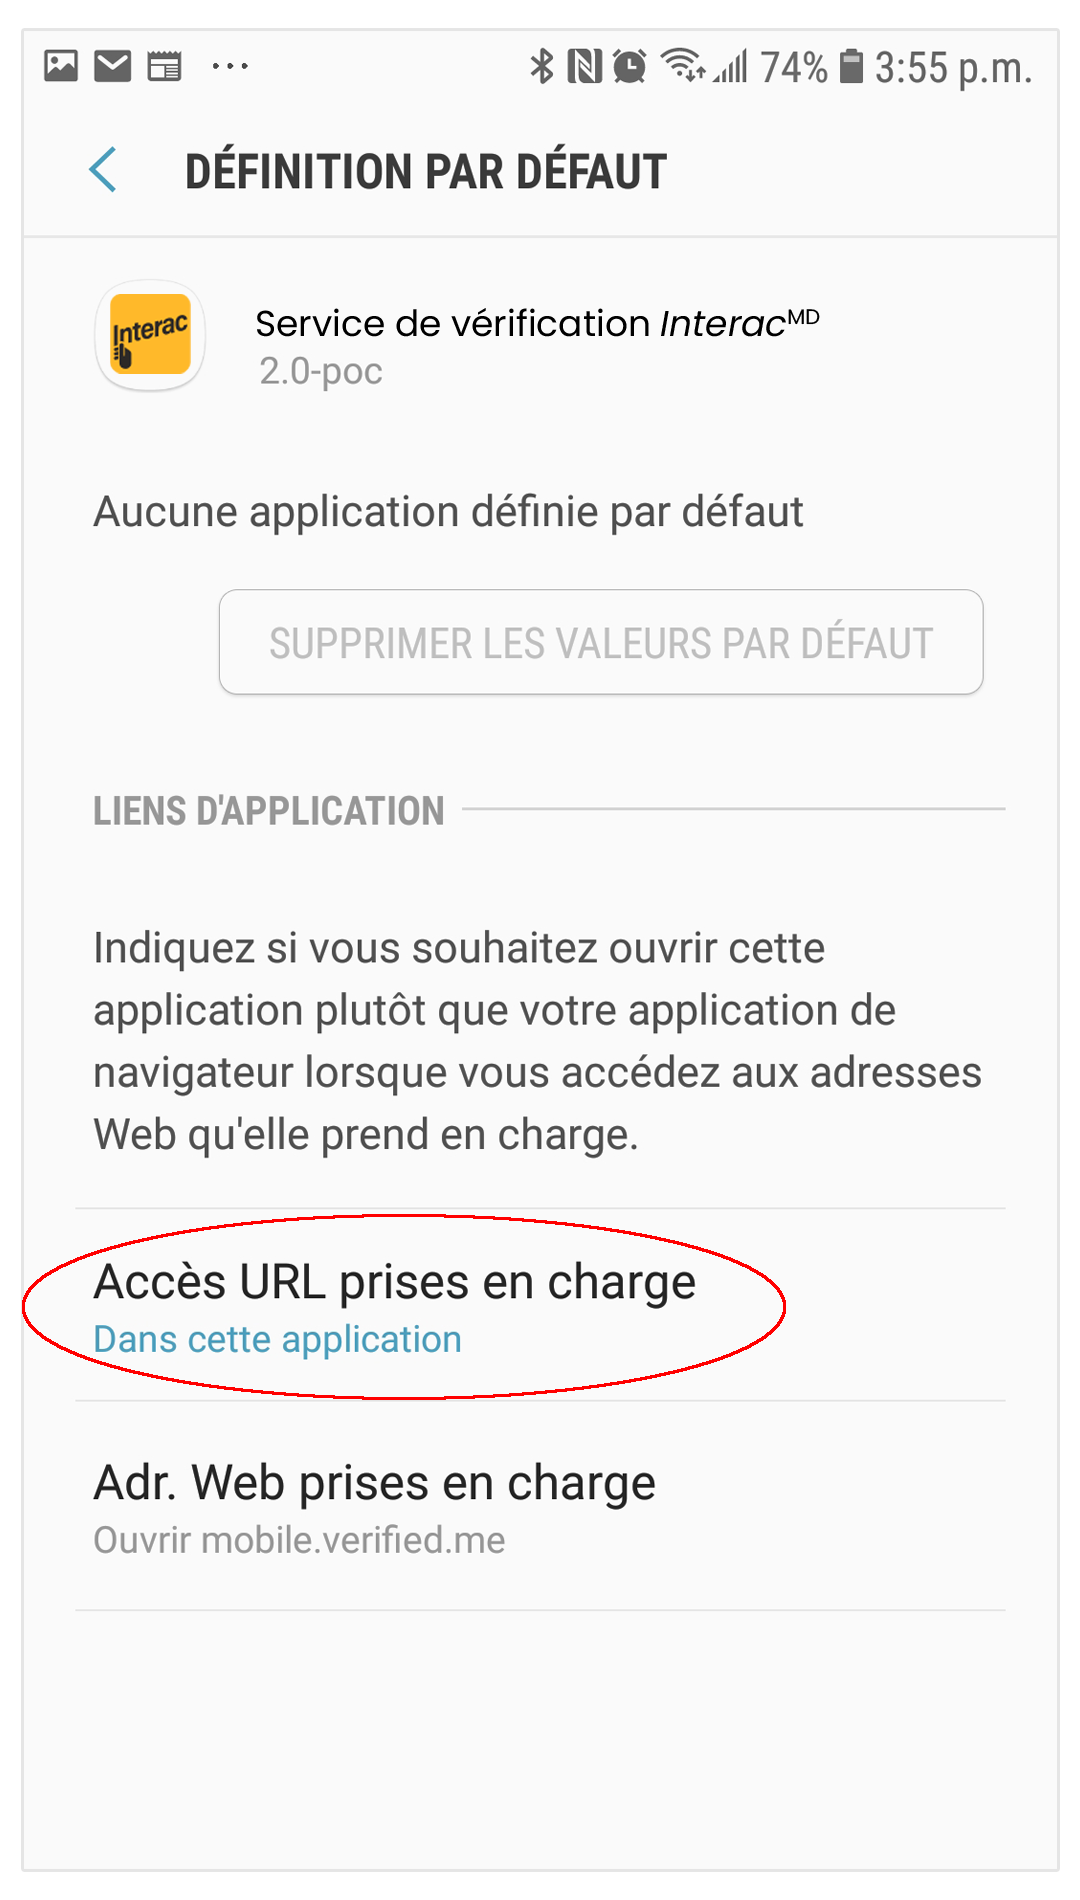 Interac verification service app URL adjustment Step 7